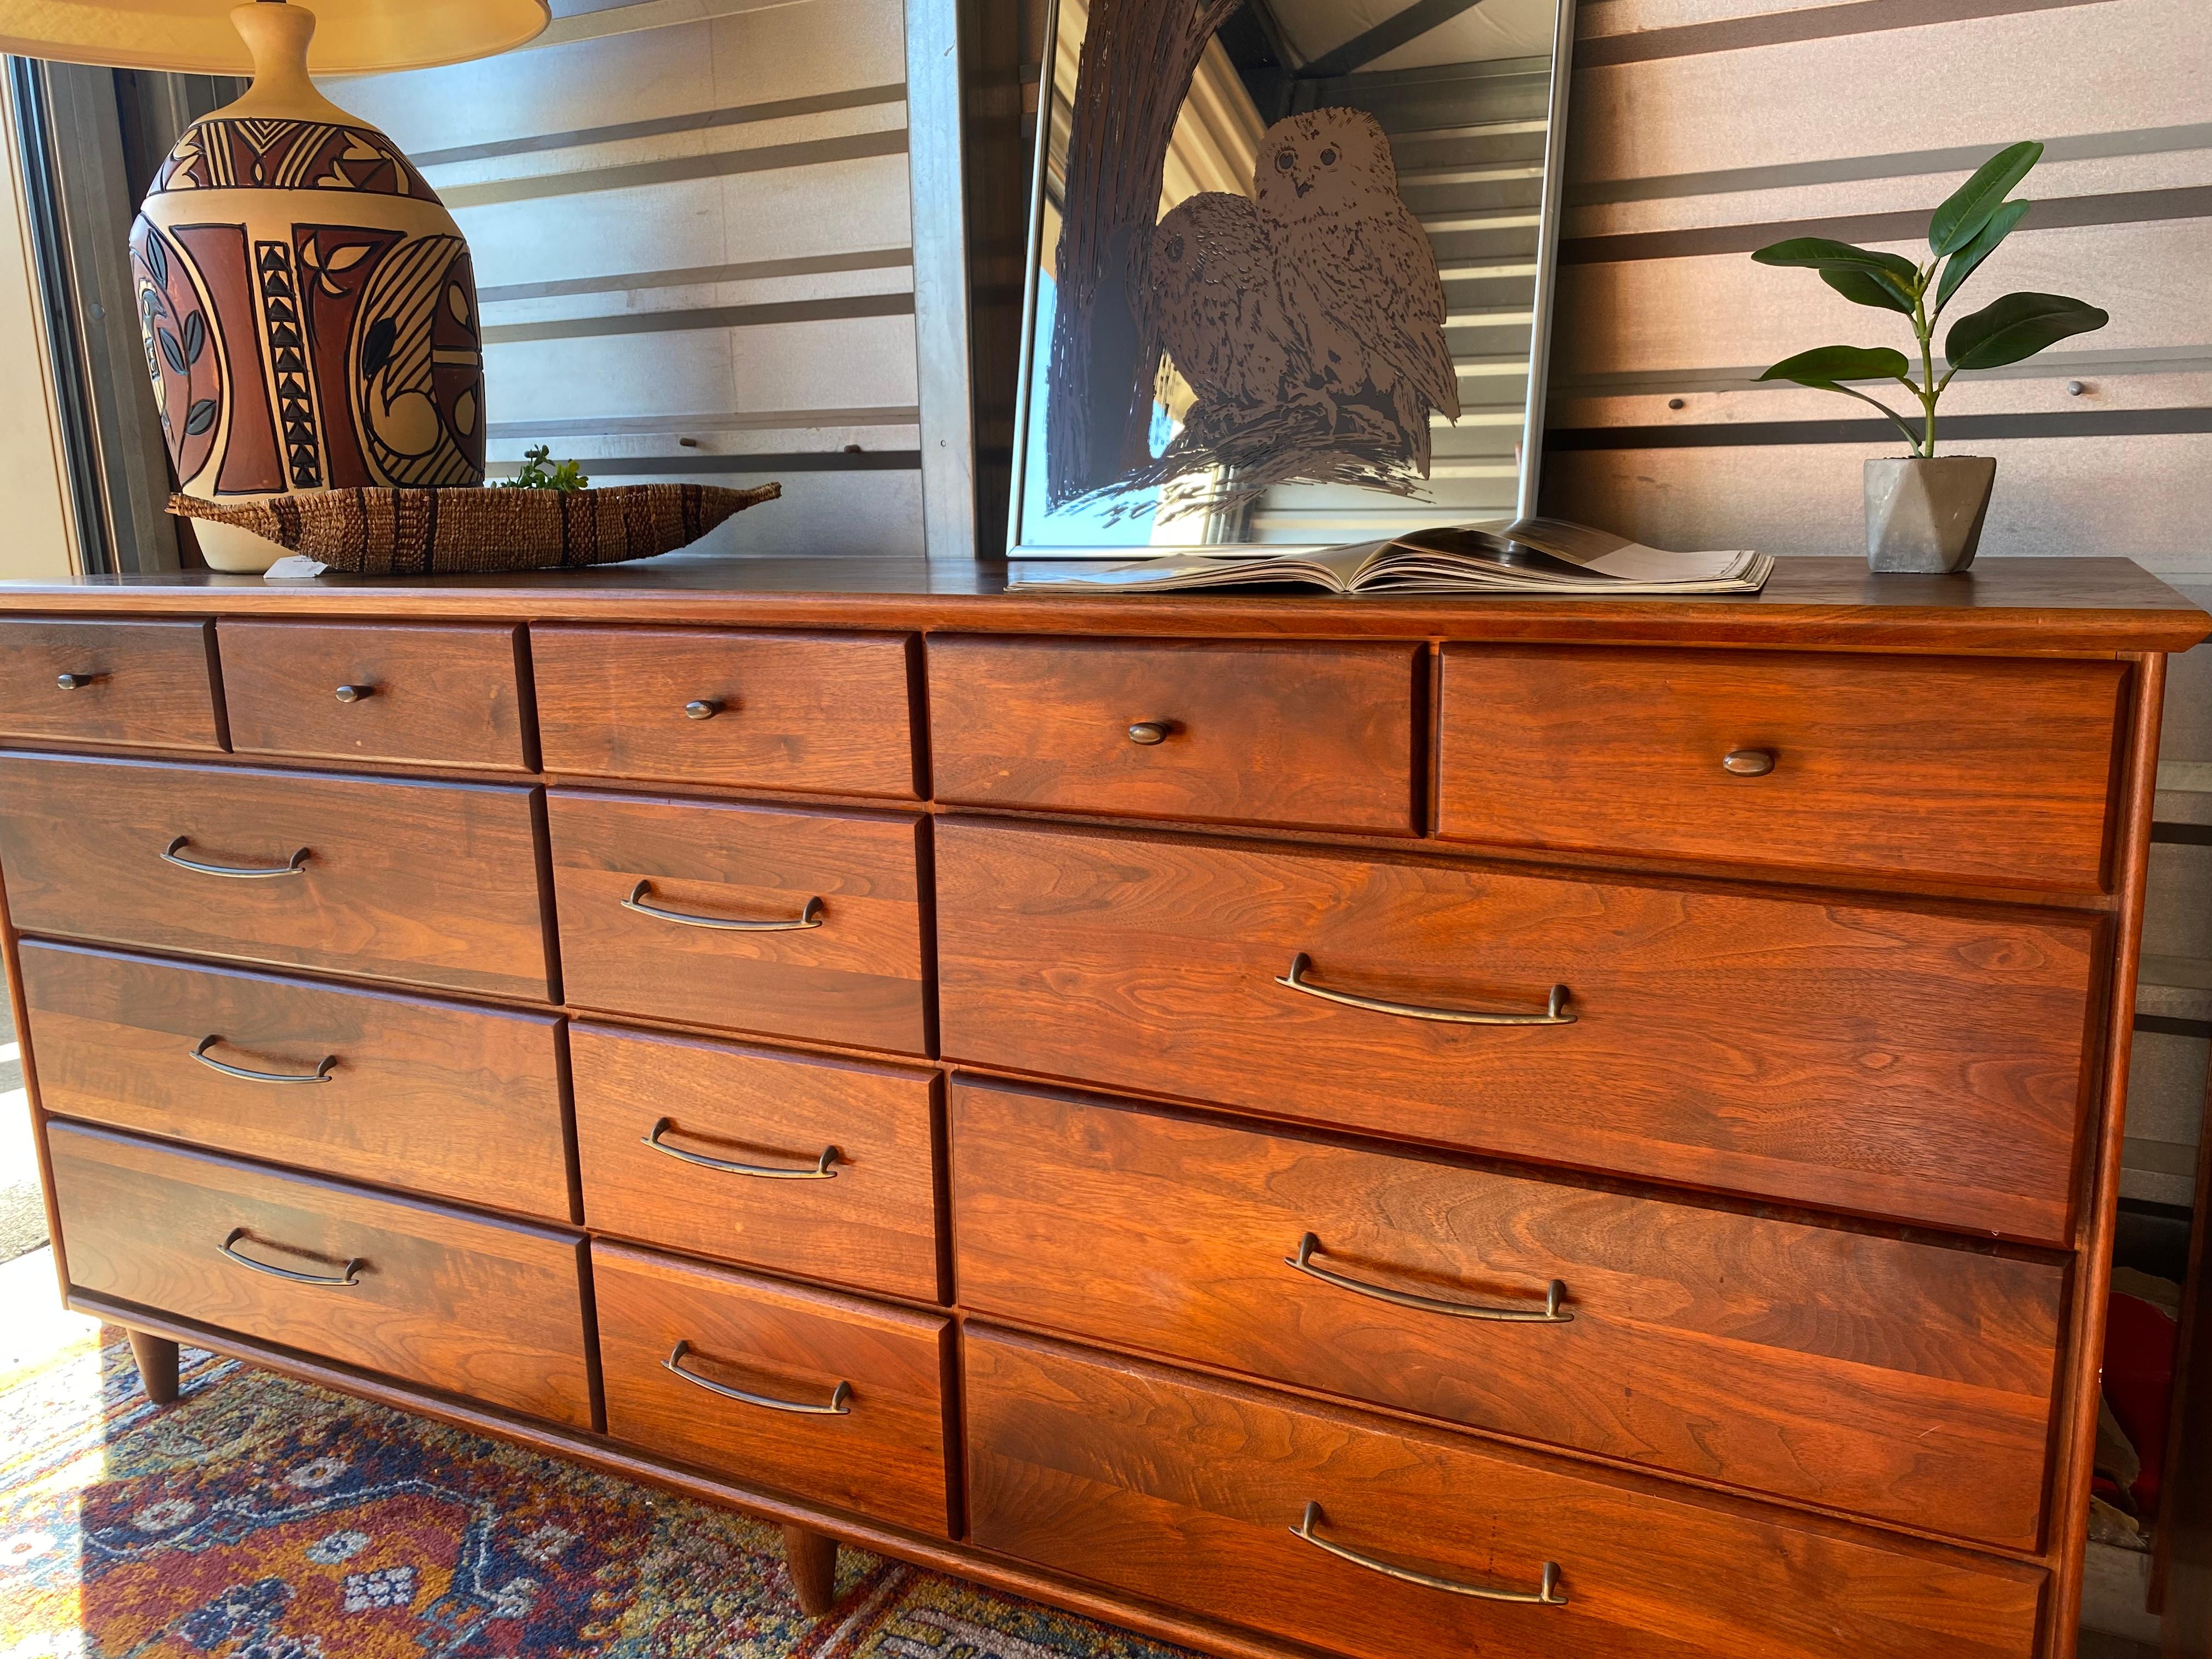 Beautiful 12 drawer dresser piece. Smooth sliding drawers. Gorgeous wood grain pattern. Such a statement piece!.